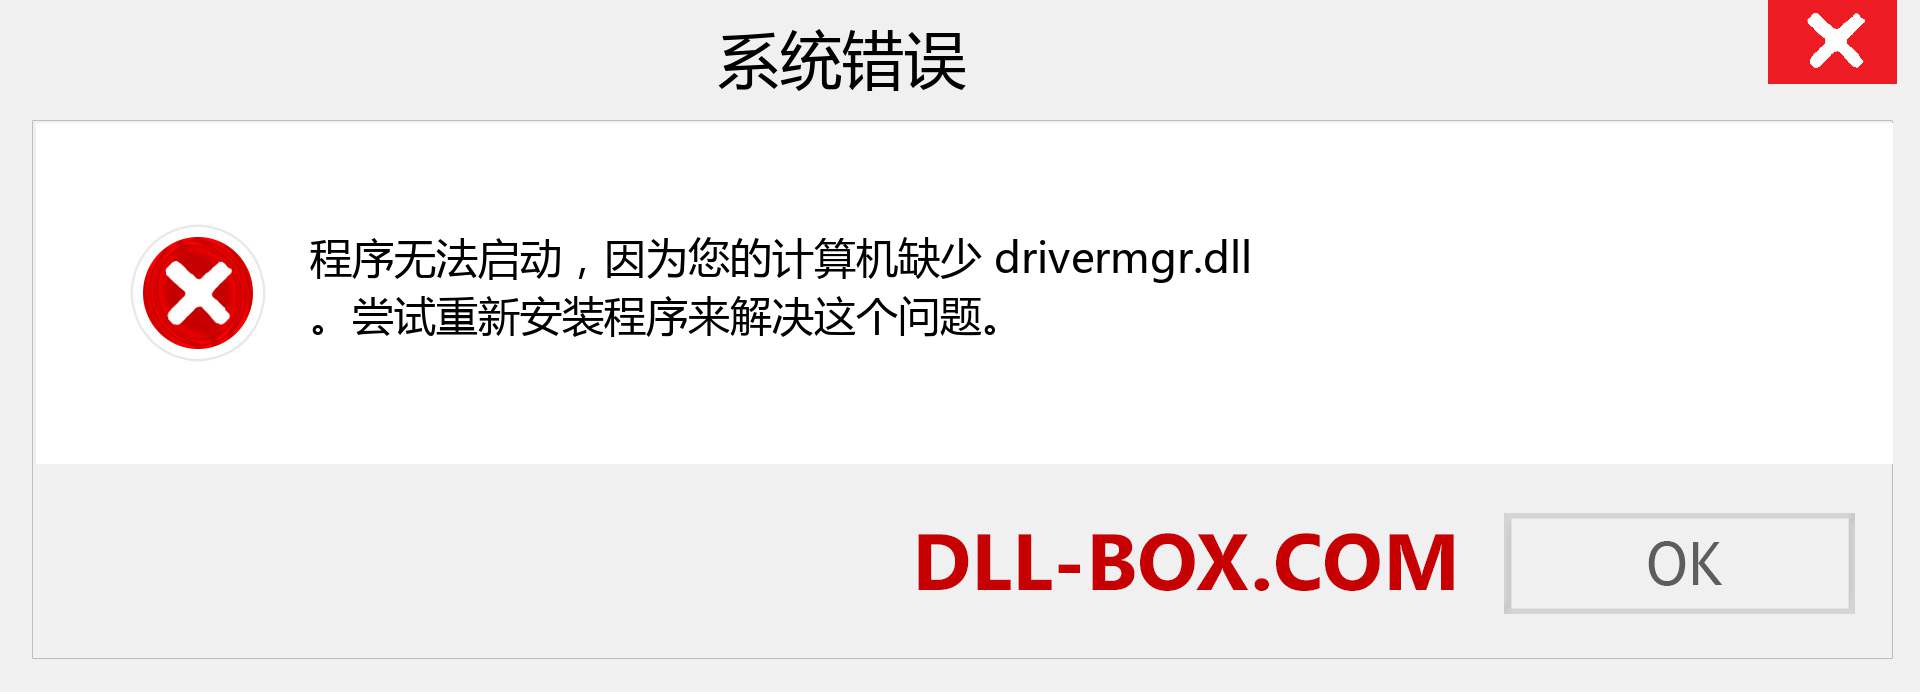 drivermgr.dll 文件丢失？。 适用于 Windows 7、8、10 的下载 - 修复 Windows、照片、图像上的 drivermgr dll 丢失错误